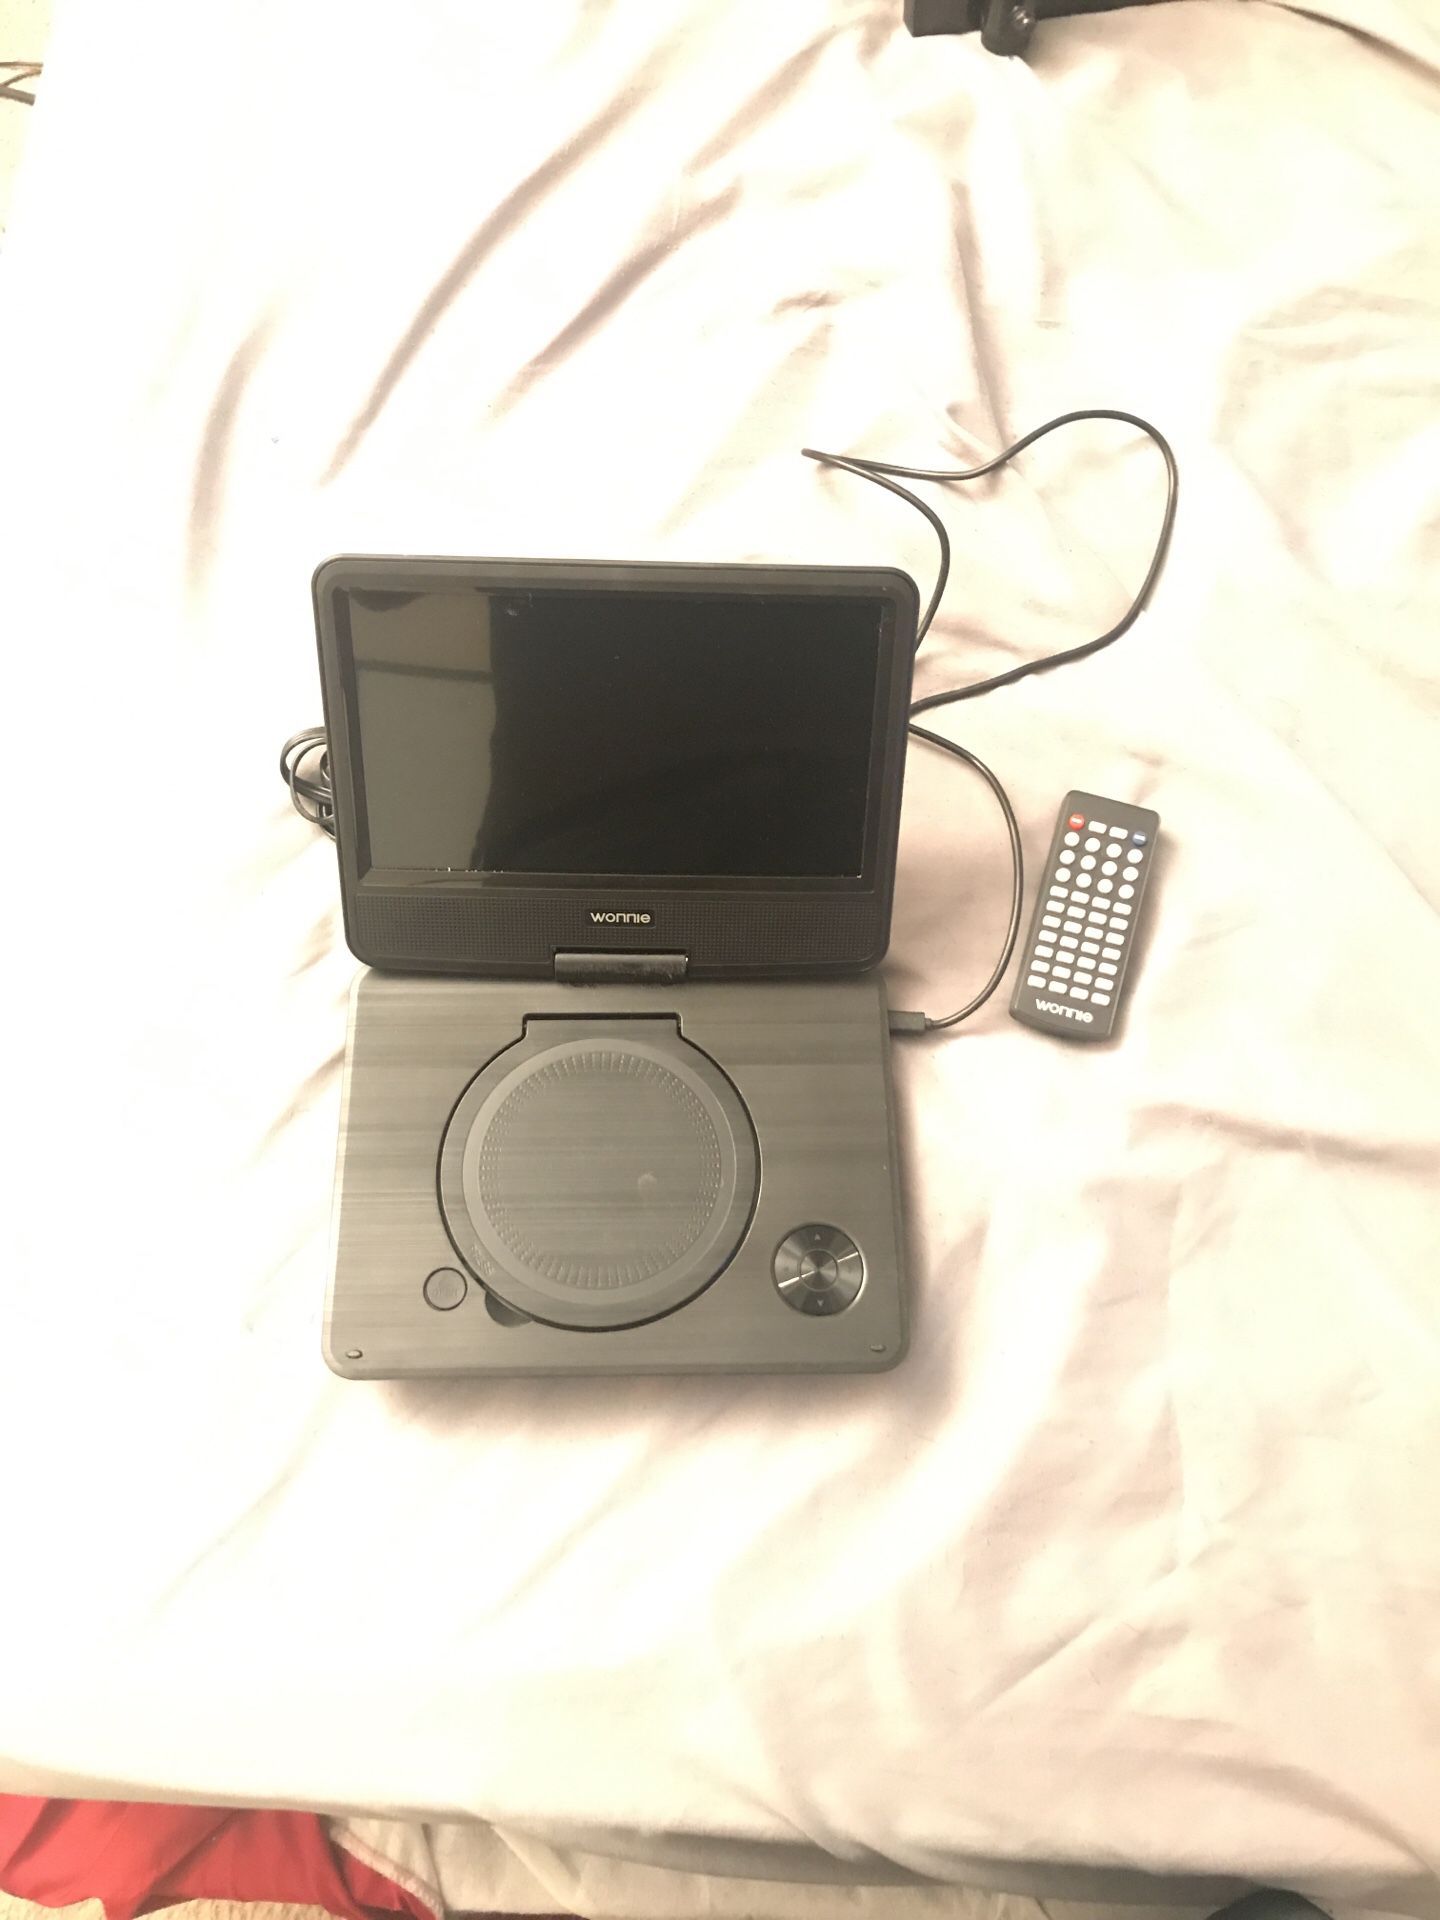 Portable DVD player